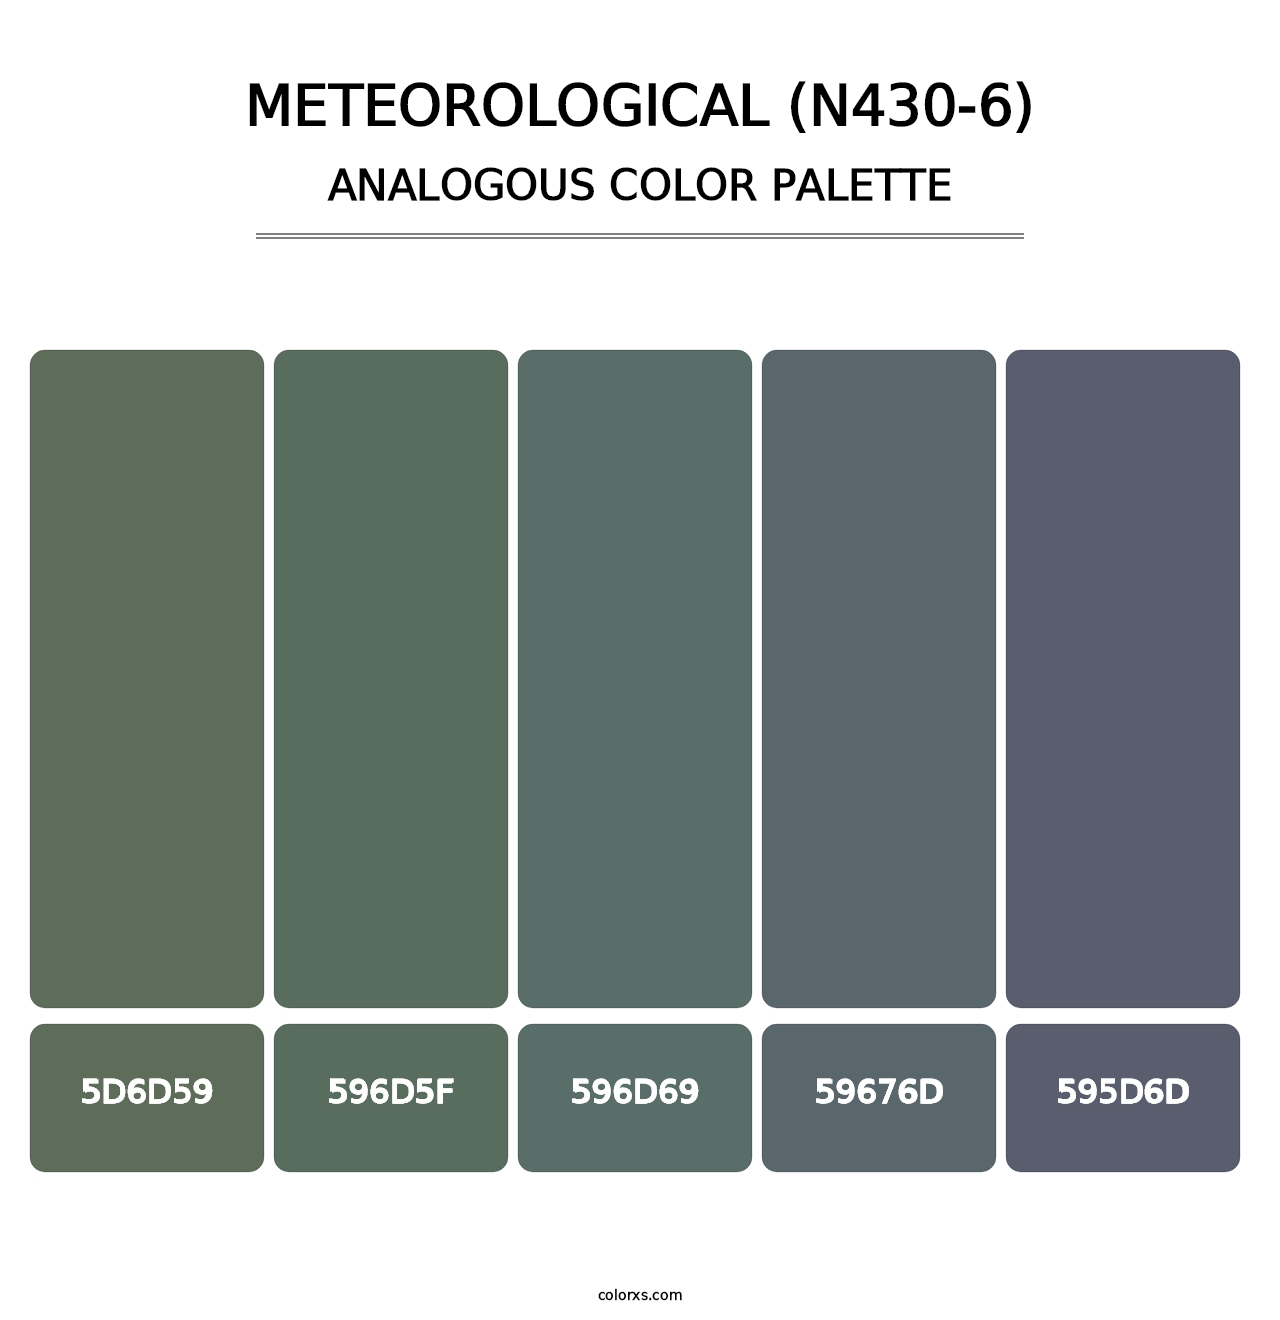 Meteorological (N430-6) - Analogous Color Palette